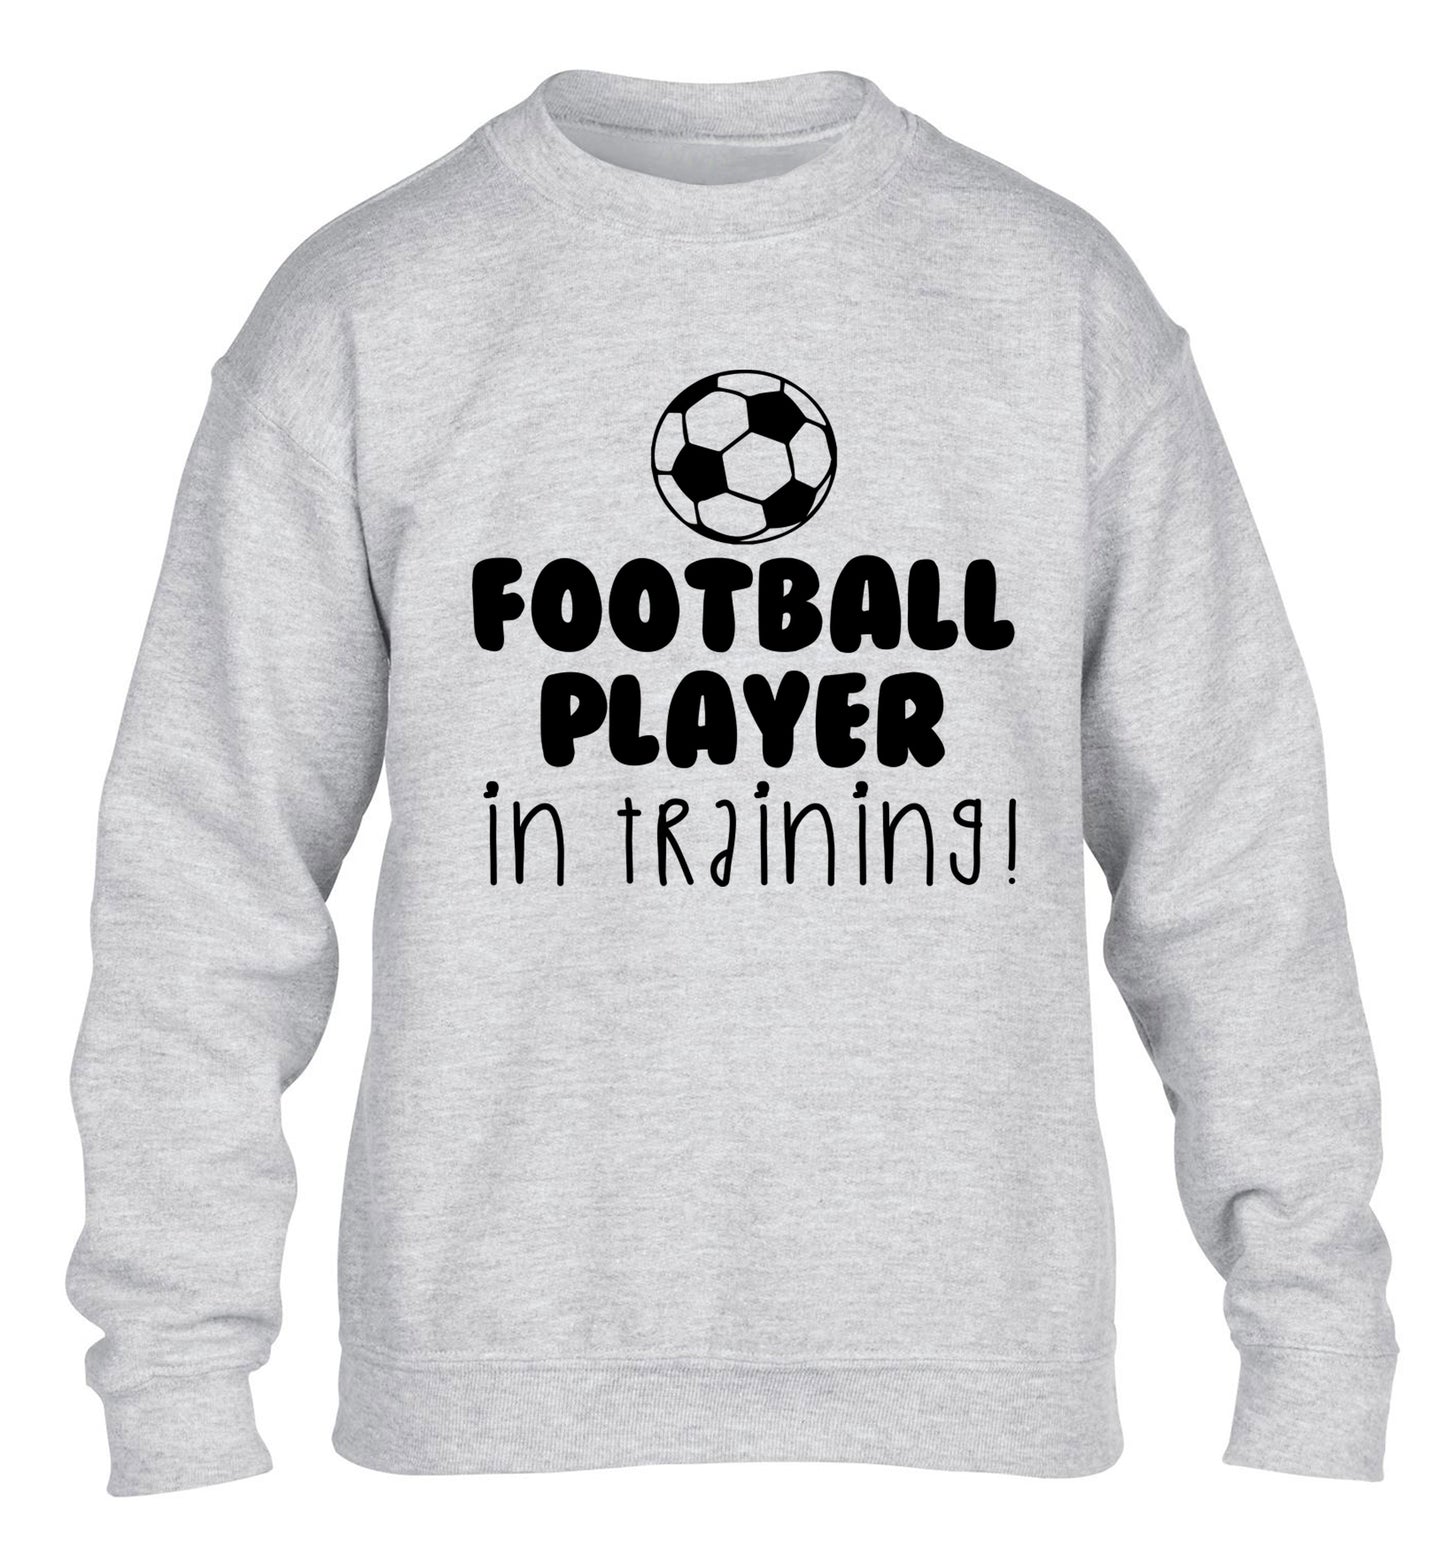 Football player in training children's grey sweater 12-14 Years